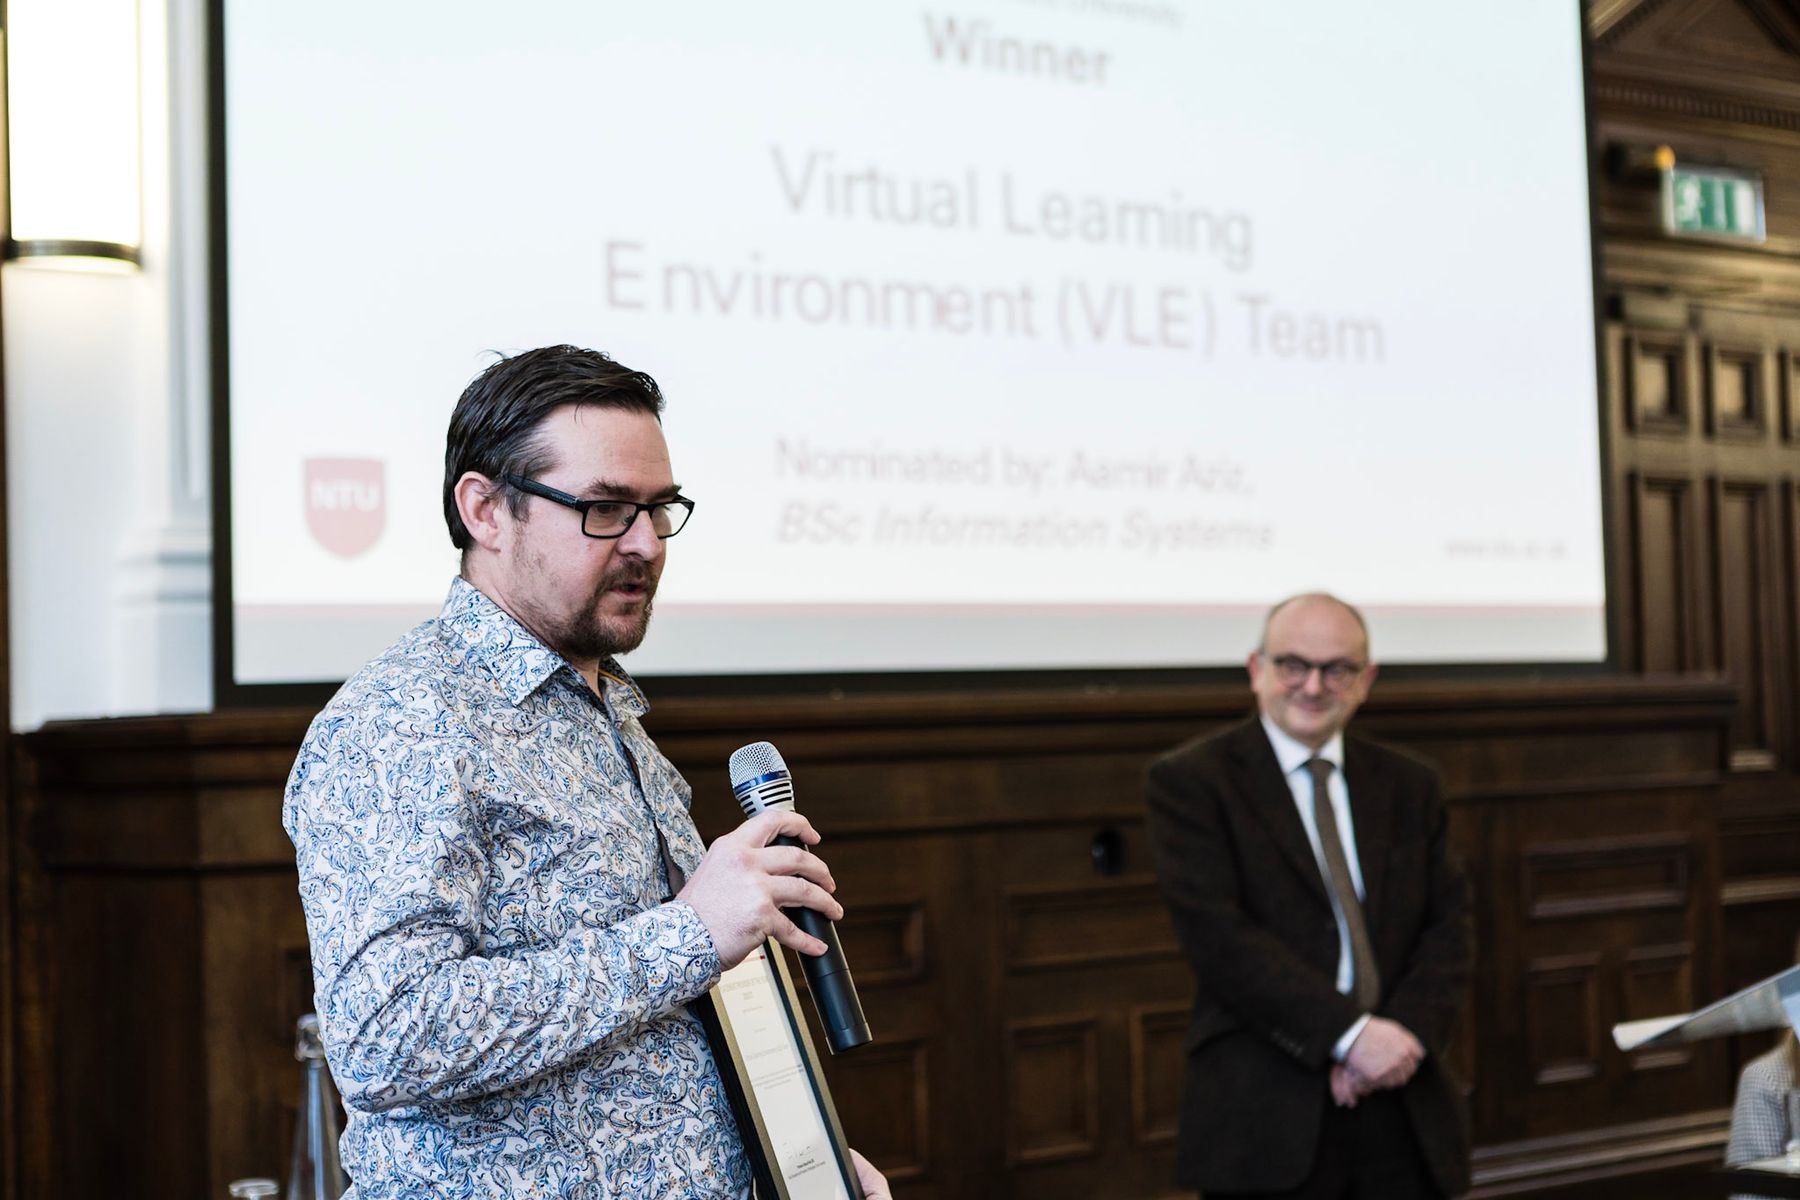 Adam Elce accepting award for NTU Virtual Learning Environment Team